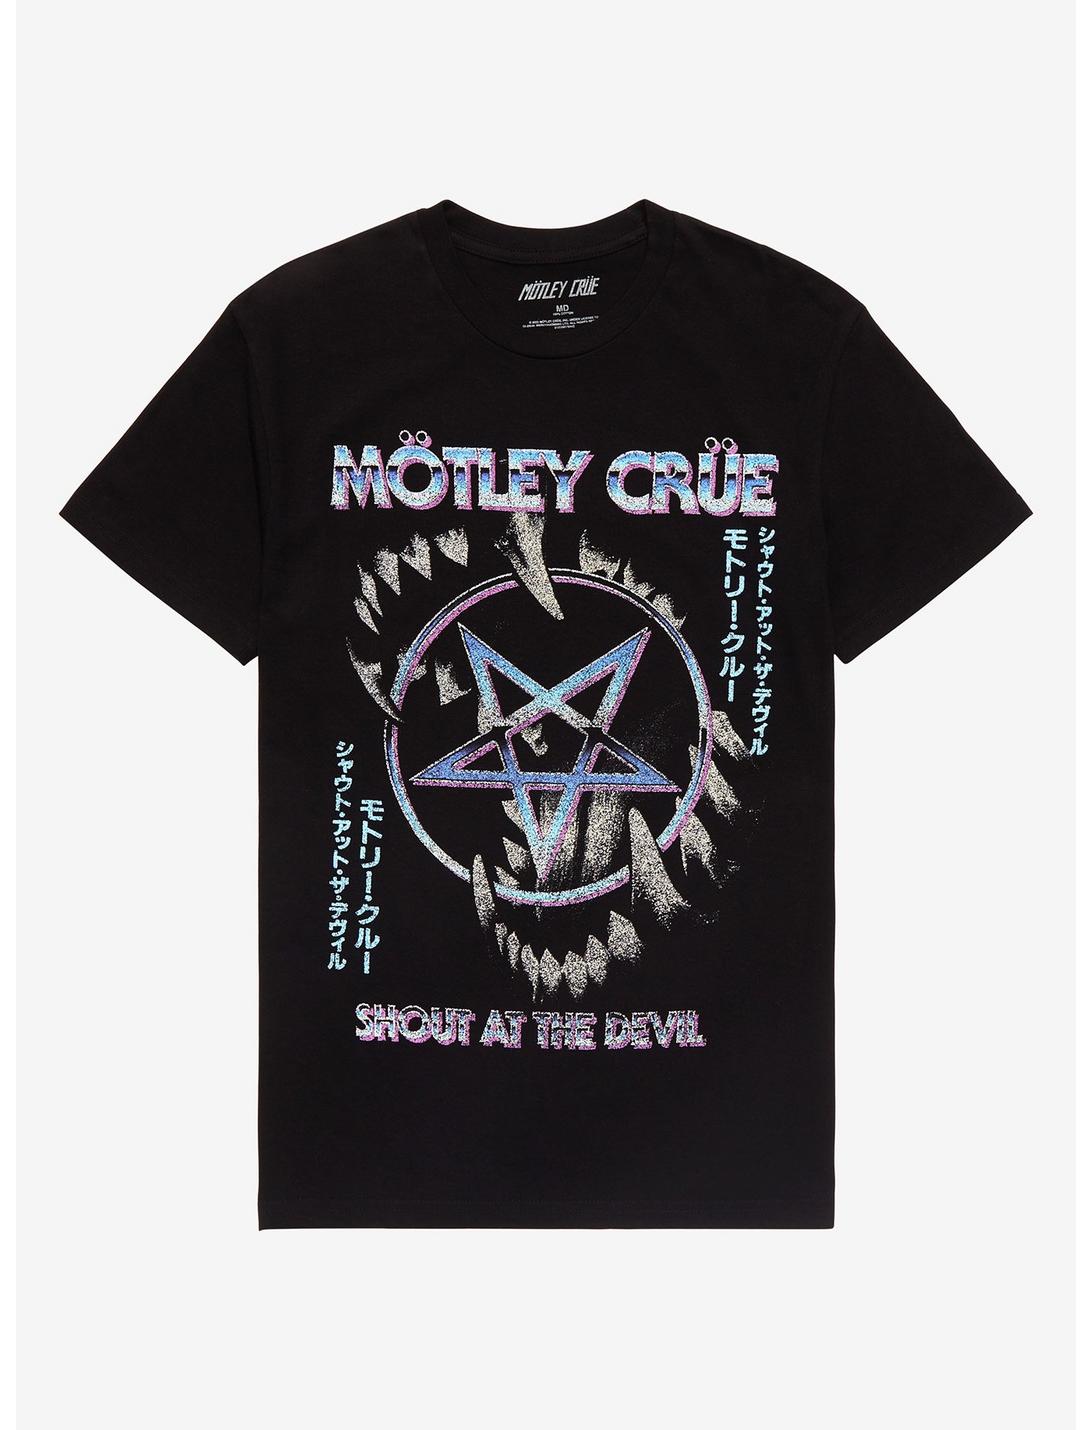 Motley Crue Shout At The Devil Kanji Boyfriend Fit Girls T-Shirt, BLACK, hi-res